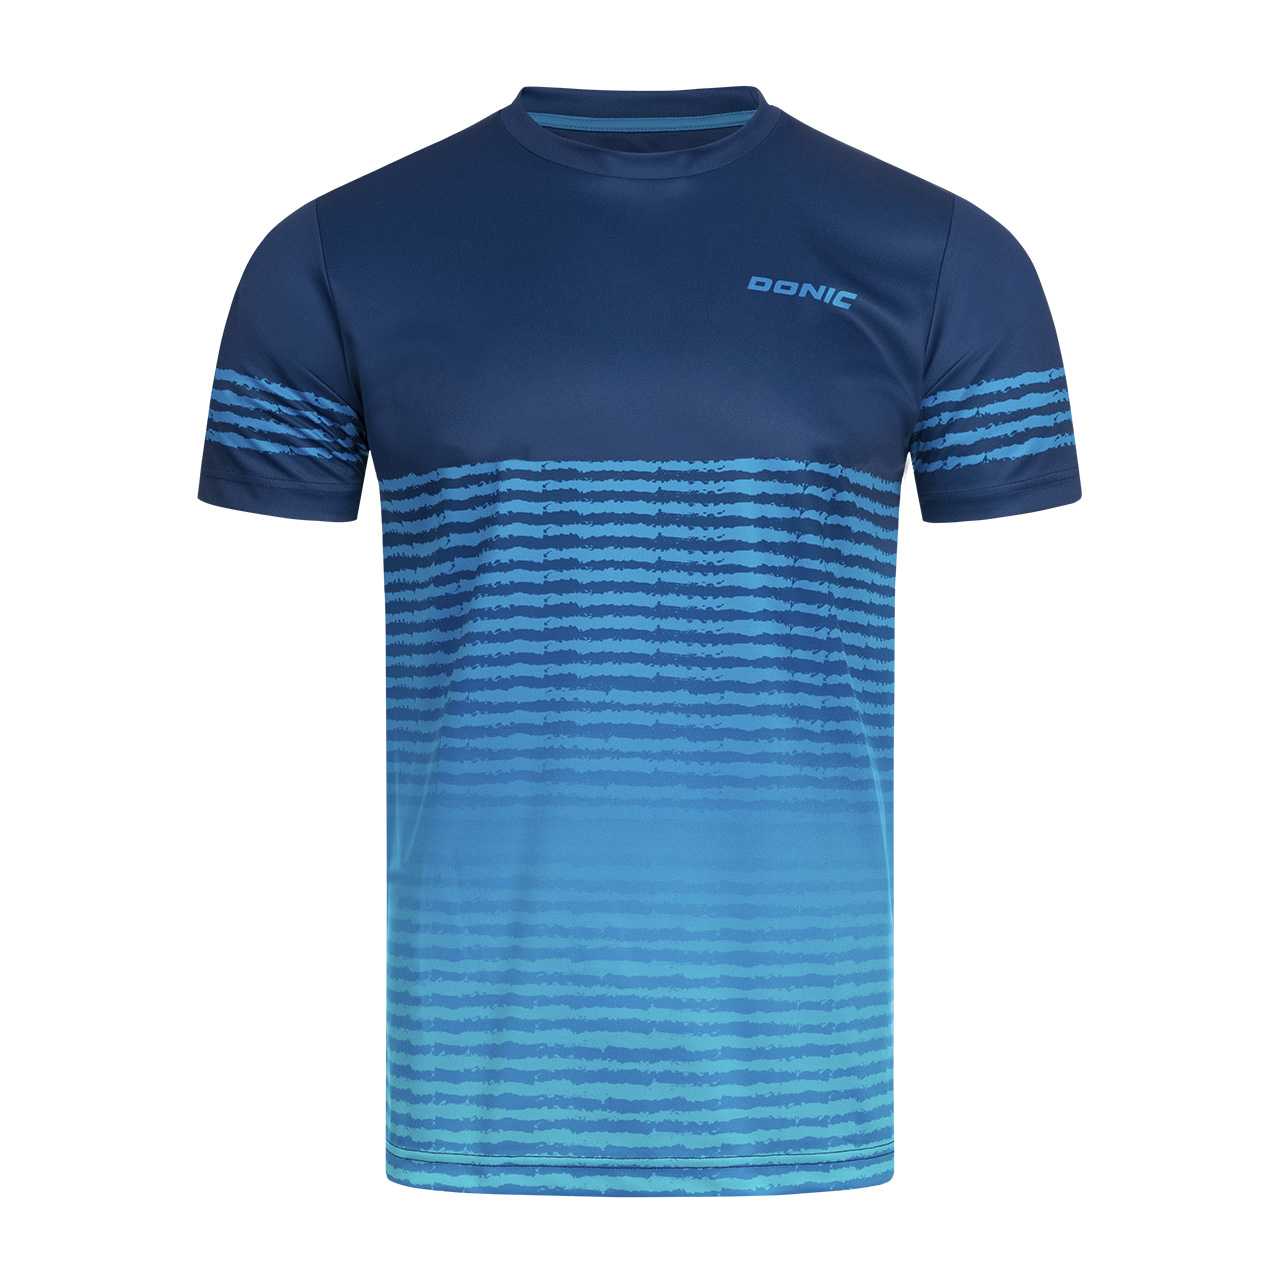 DONIC T-Shirt Dragon Schwarz  Tischtennis-Trikot Badminton Tischtennis T-Shirt